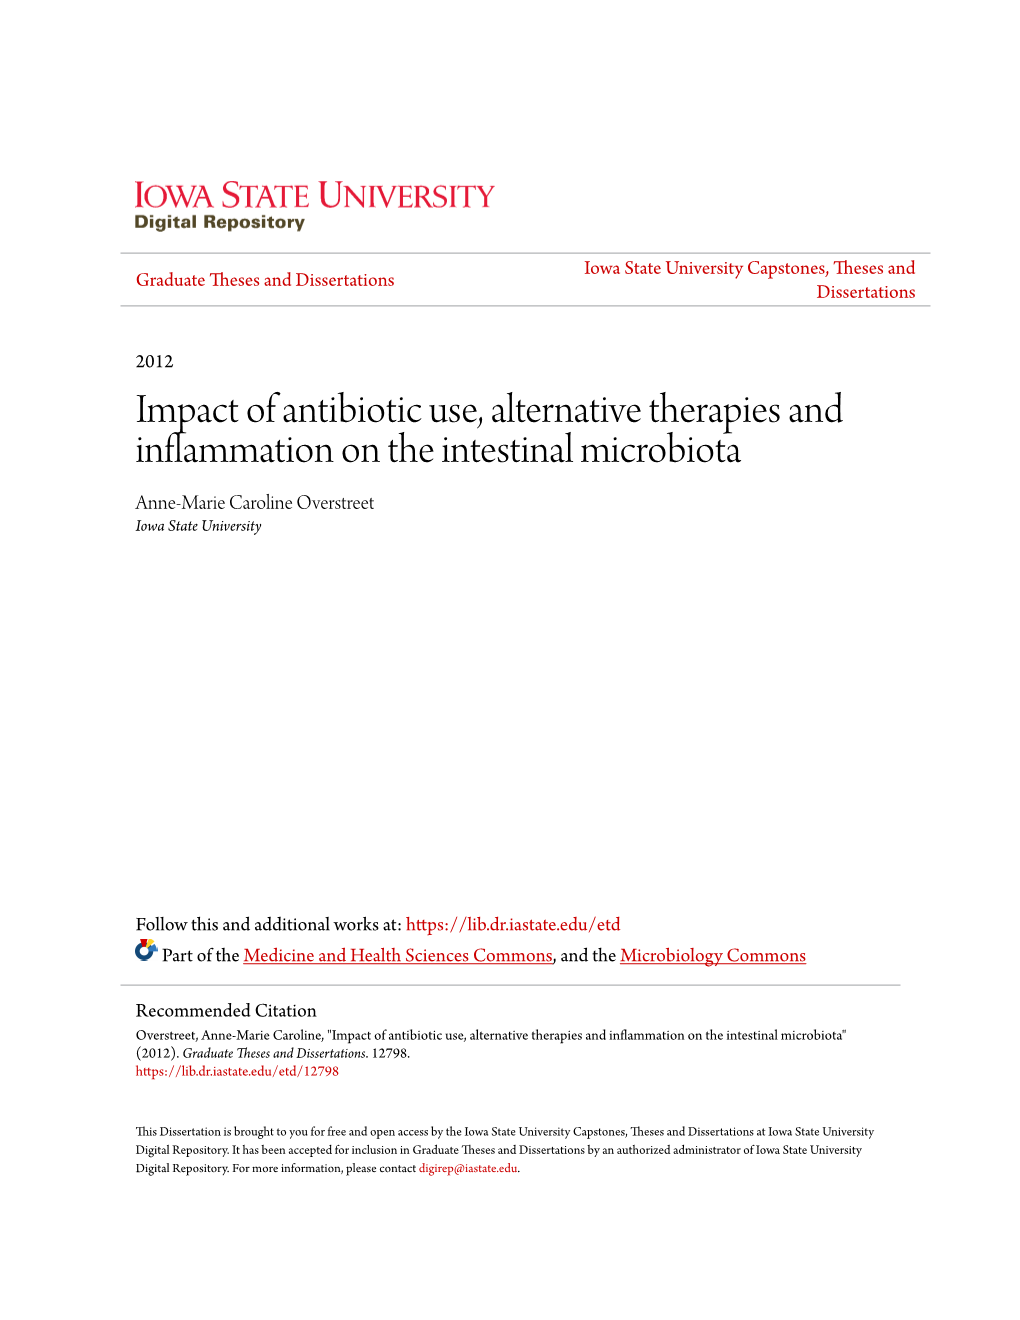 Impact of Antibiotic Use, Alternative Therapies and Inflammation on the Intestinal Microbiota Anne-Marie Caroline Overstreet Iowa State University